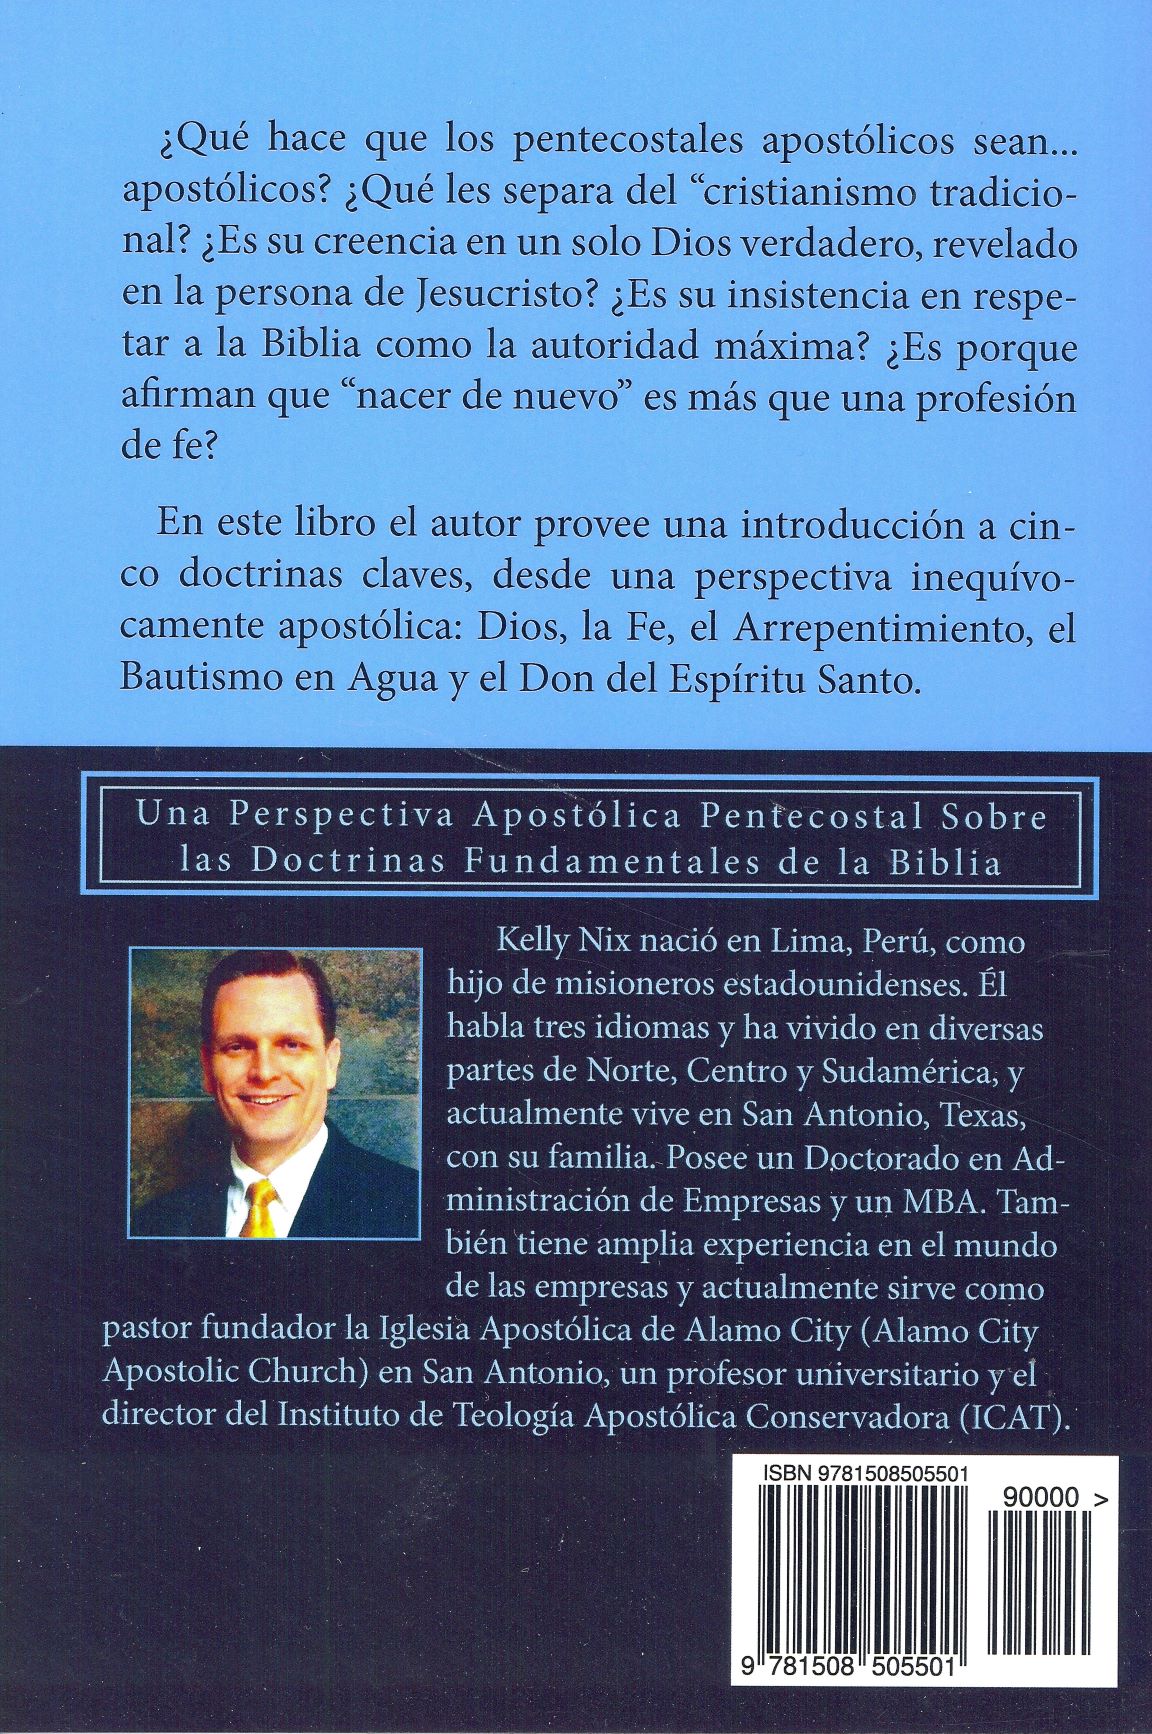 Distinctive Doctrines of the Apostolic Church - Kelly Nix (Spanish)